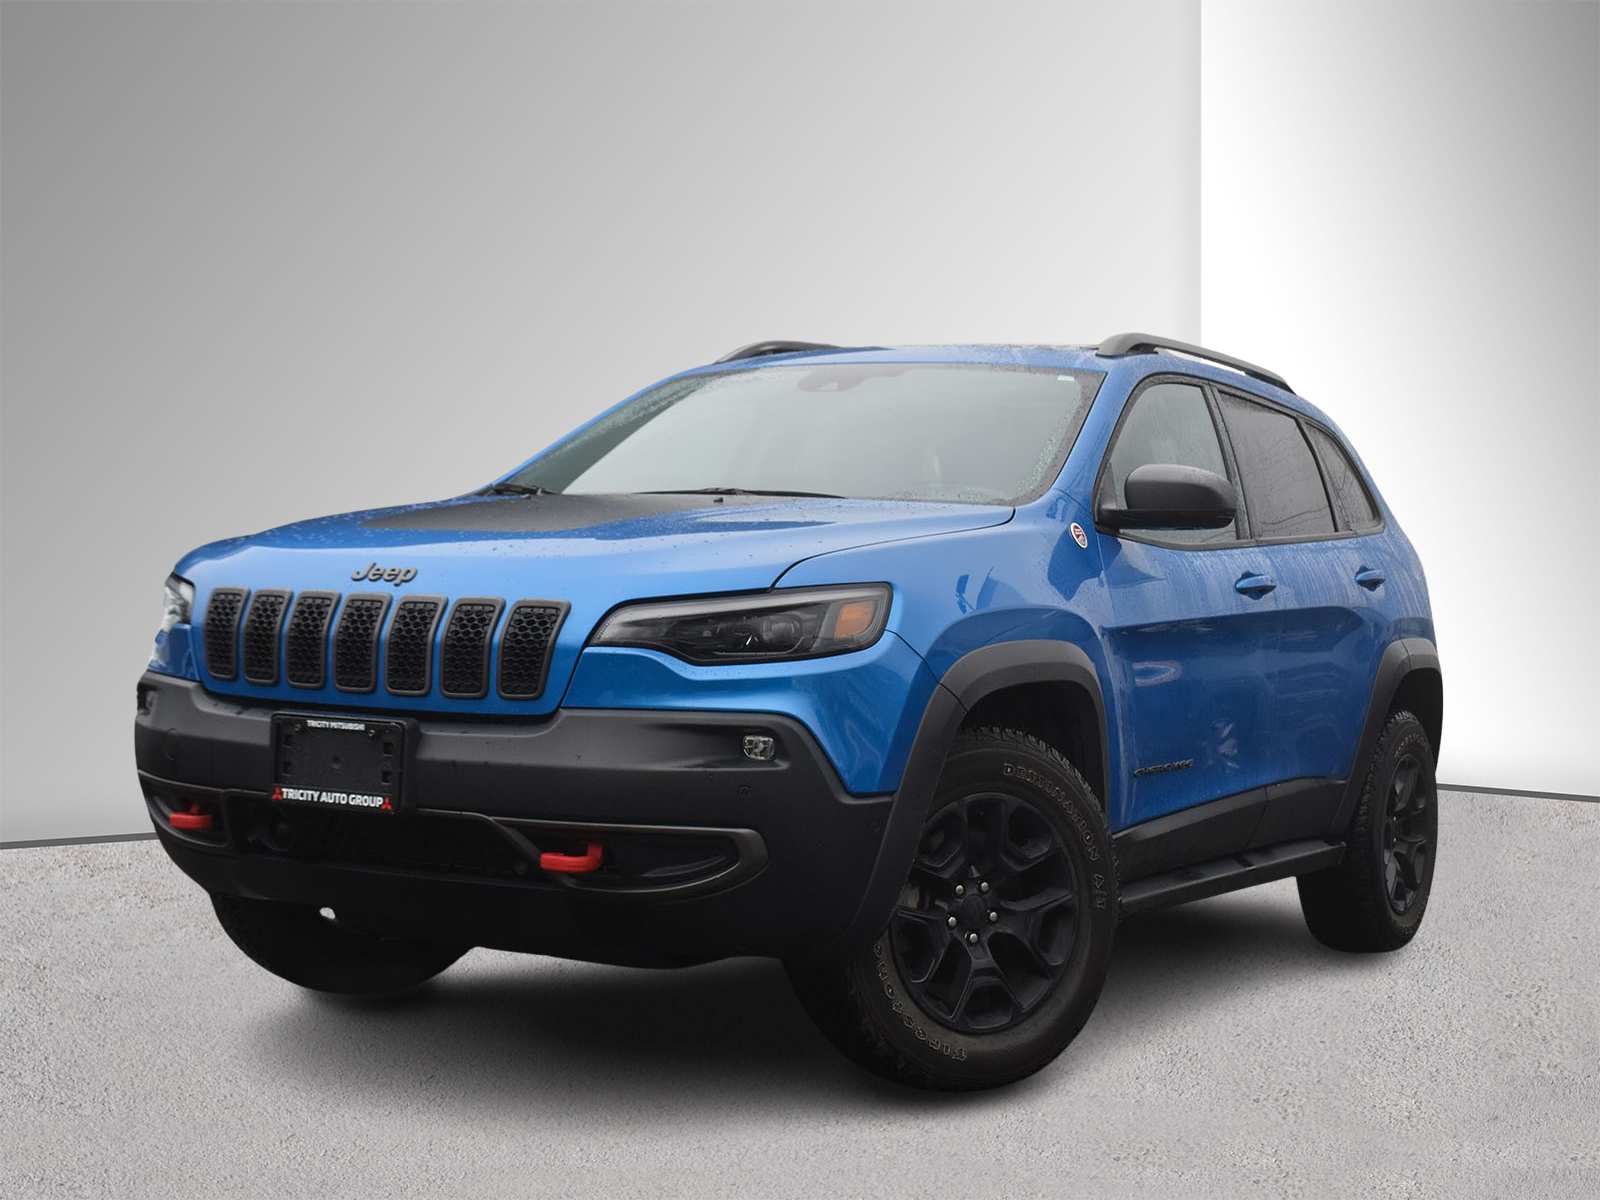 2020 Jeep Cherokee Trailhawk Elite - Leather, Navigation, Sunroof